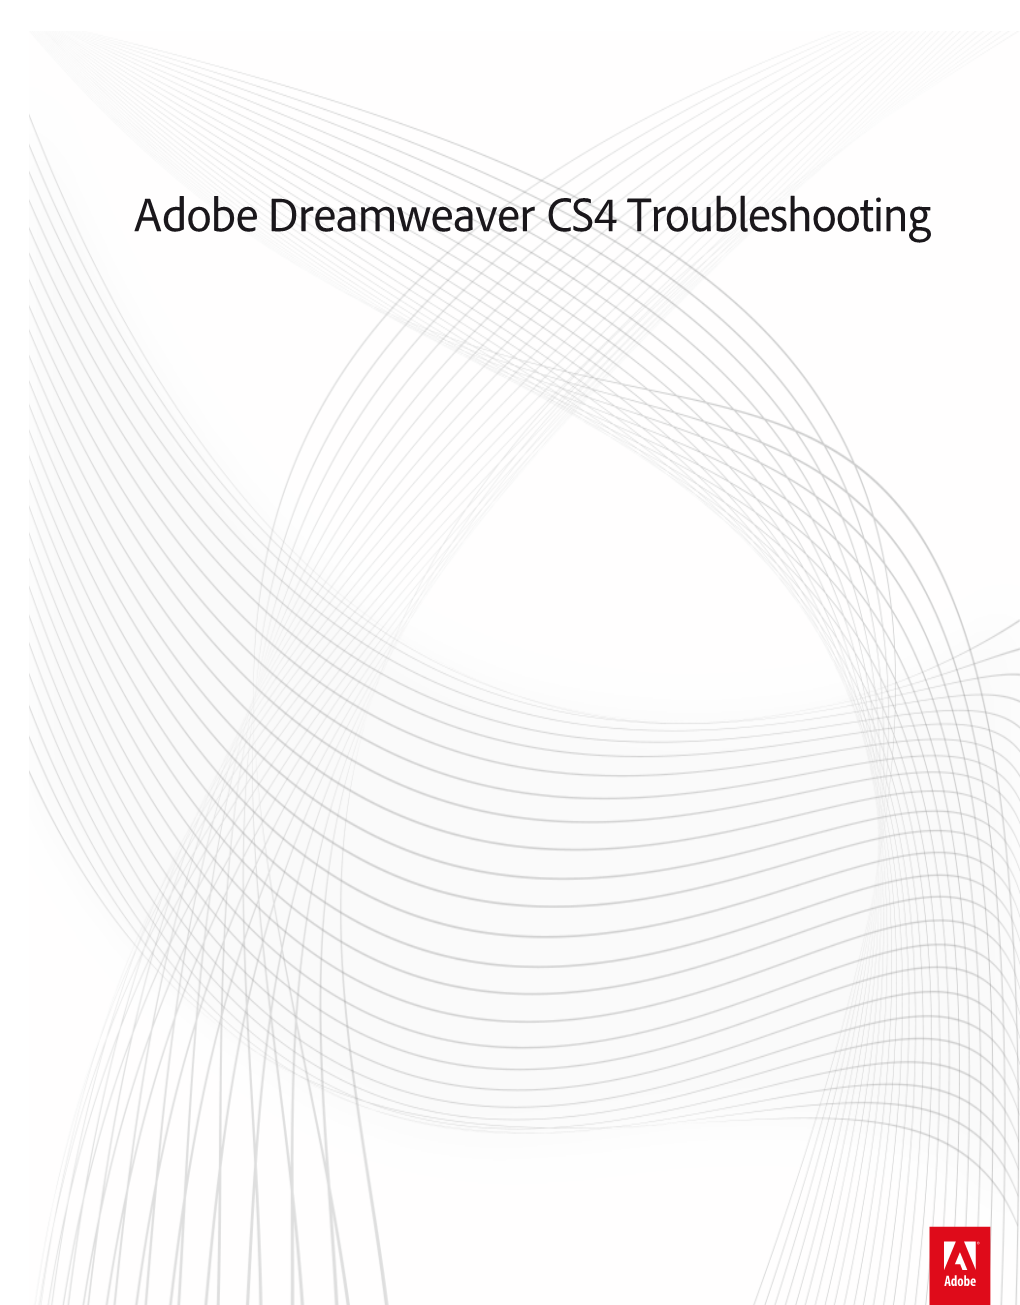 Adobe Dreamweaver CS4 Troubleshooting Legal Notices